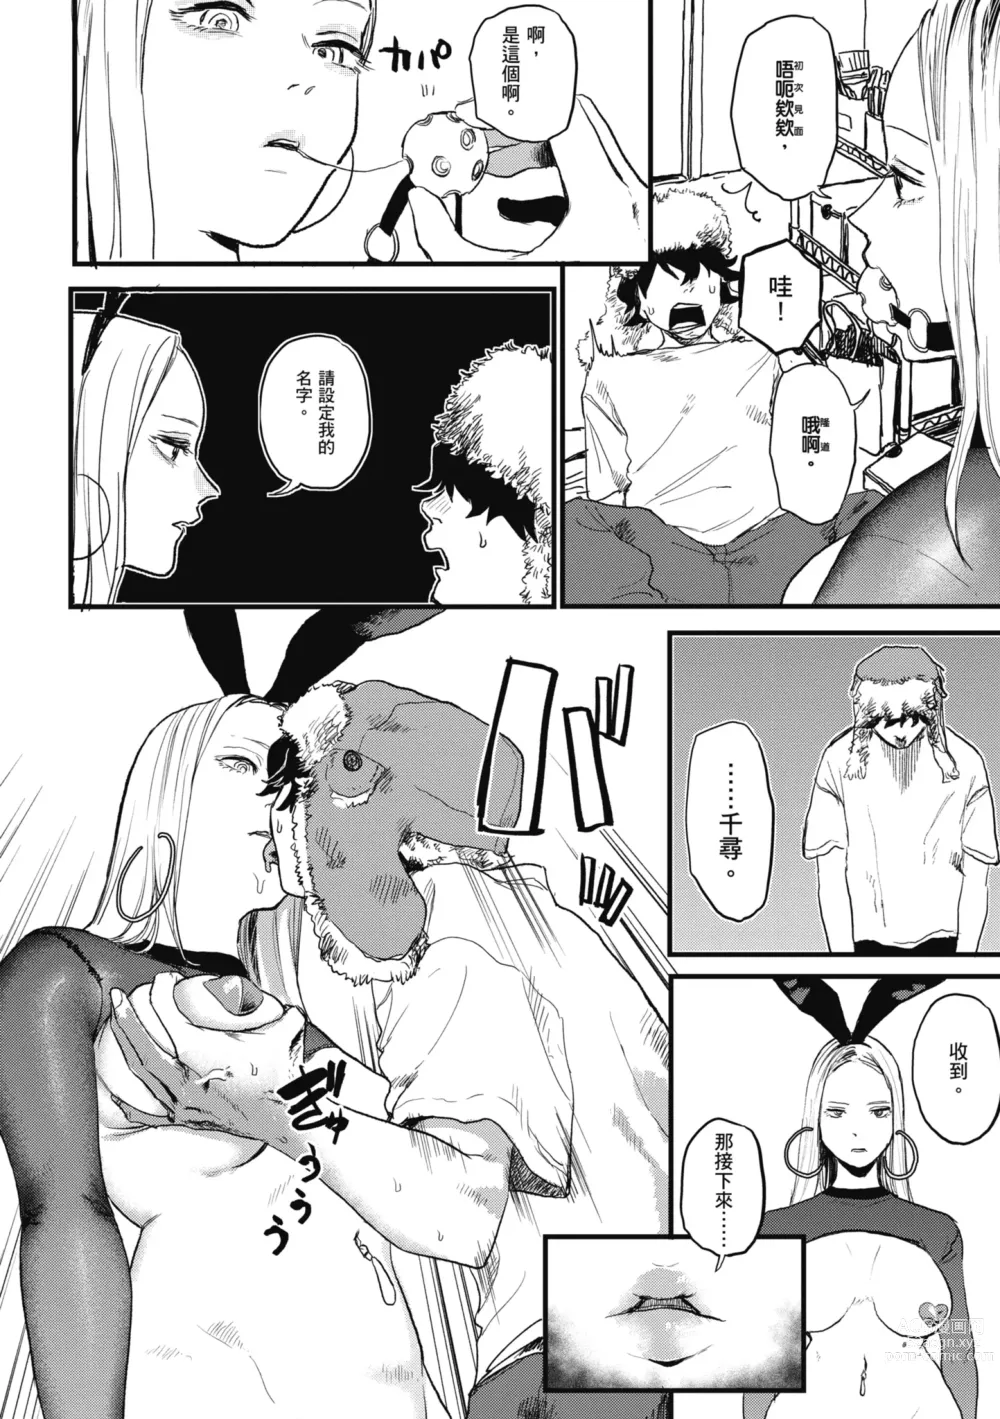 Page 8 of manga BETTER THAN SEX